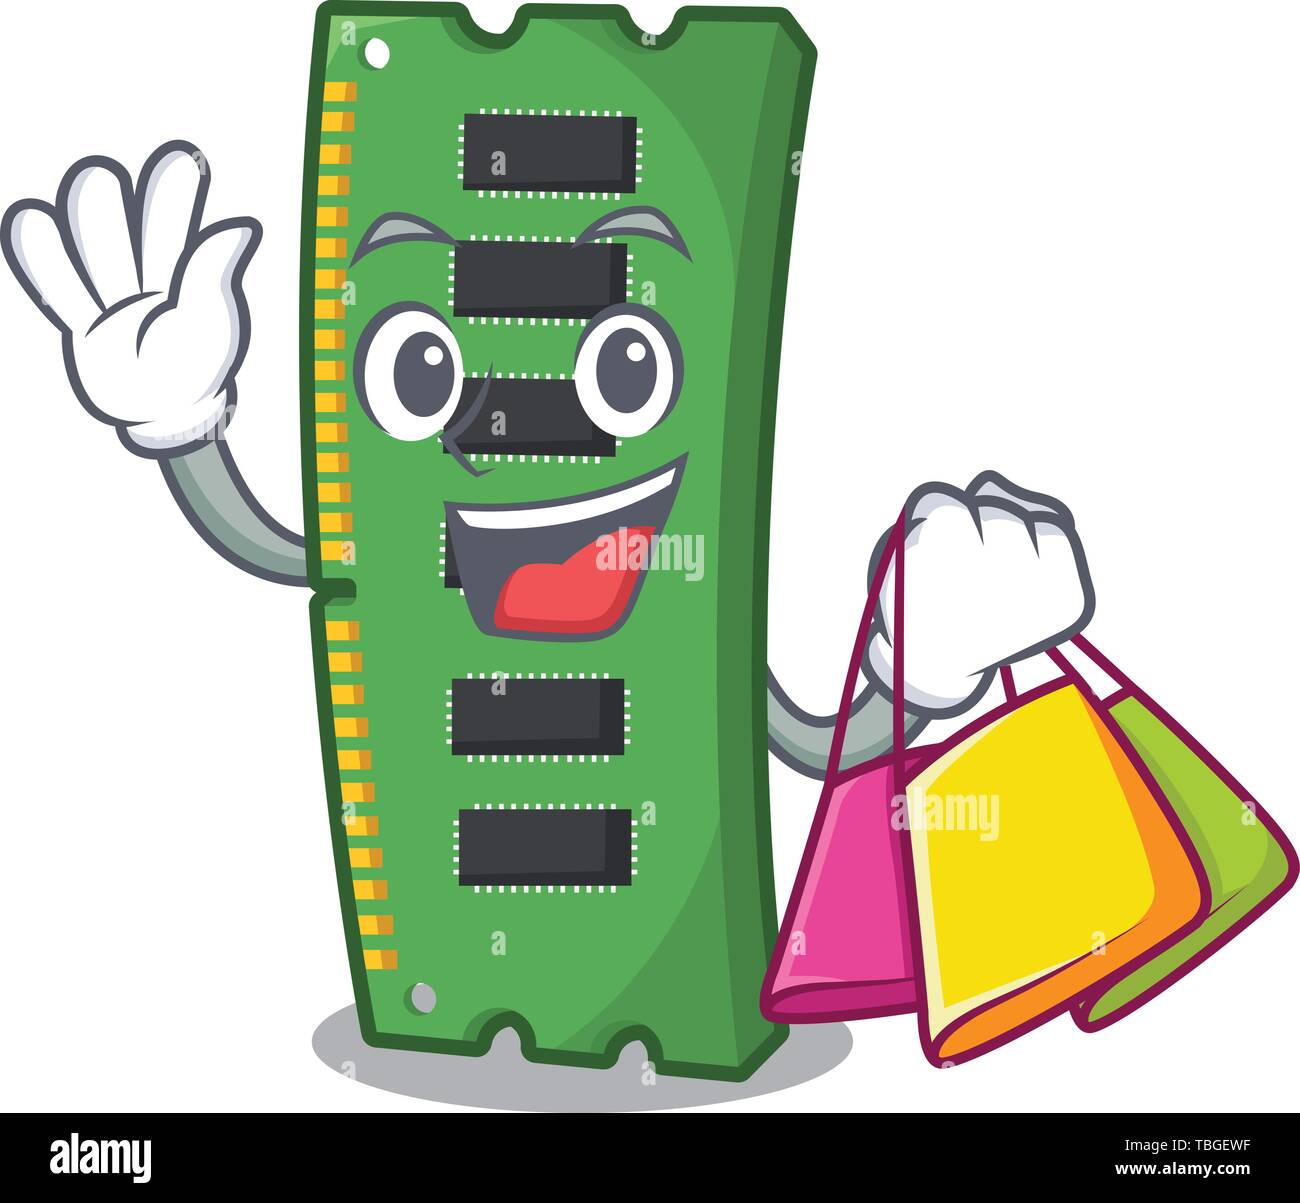 Shopping RAM memory card the mascot shape Stock Vector